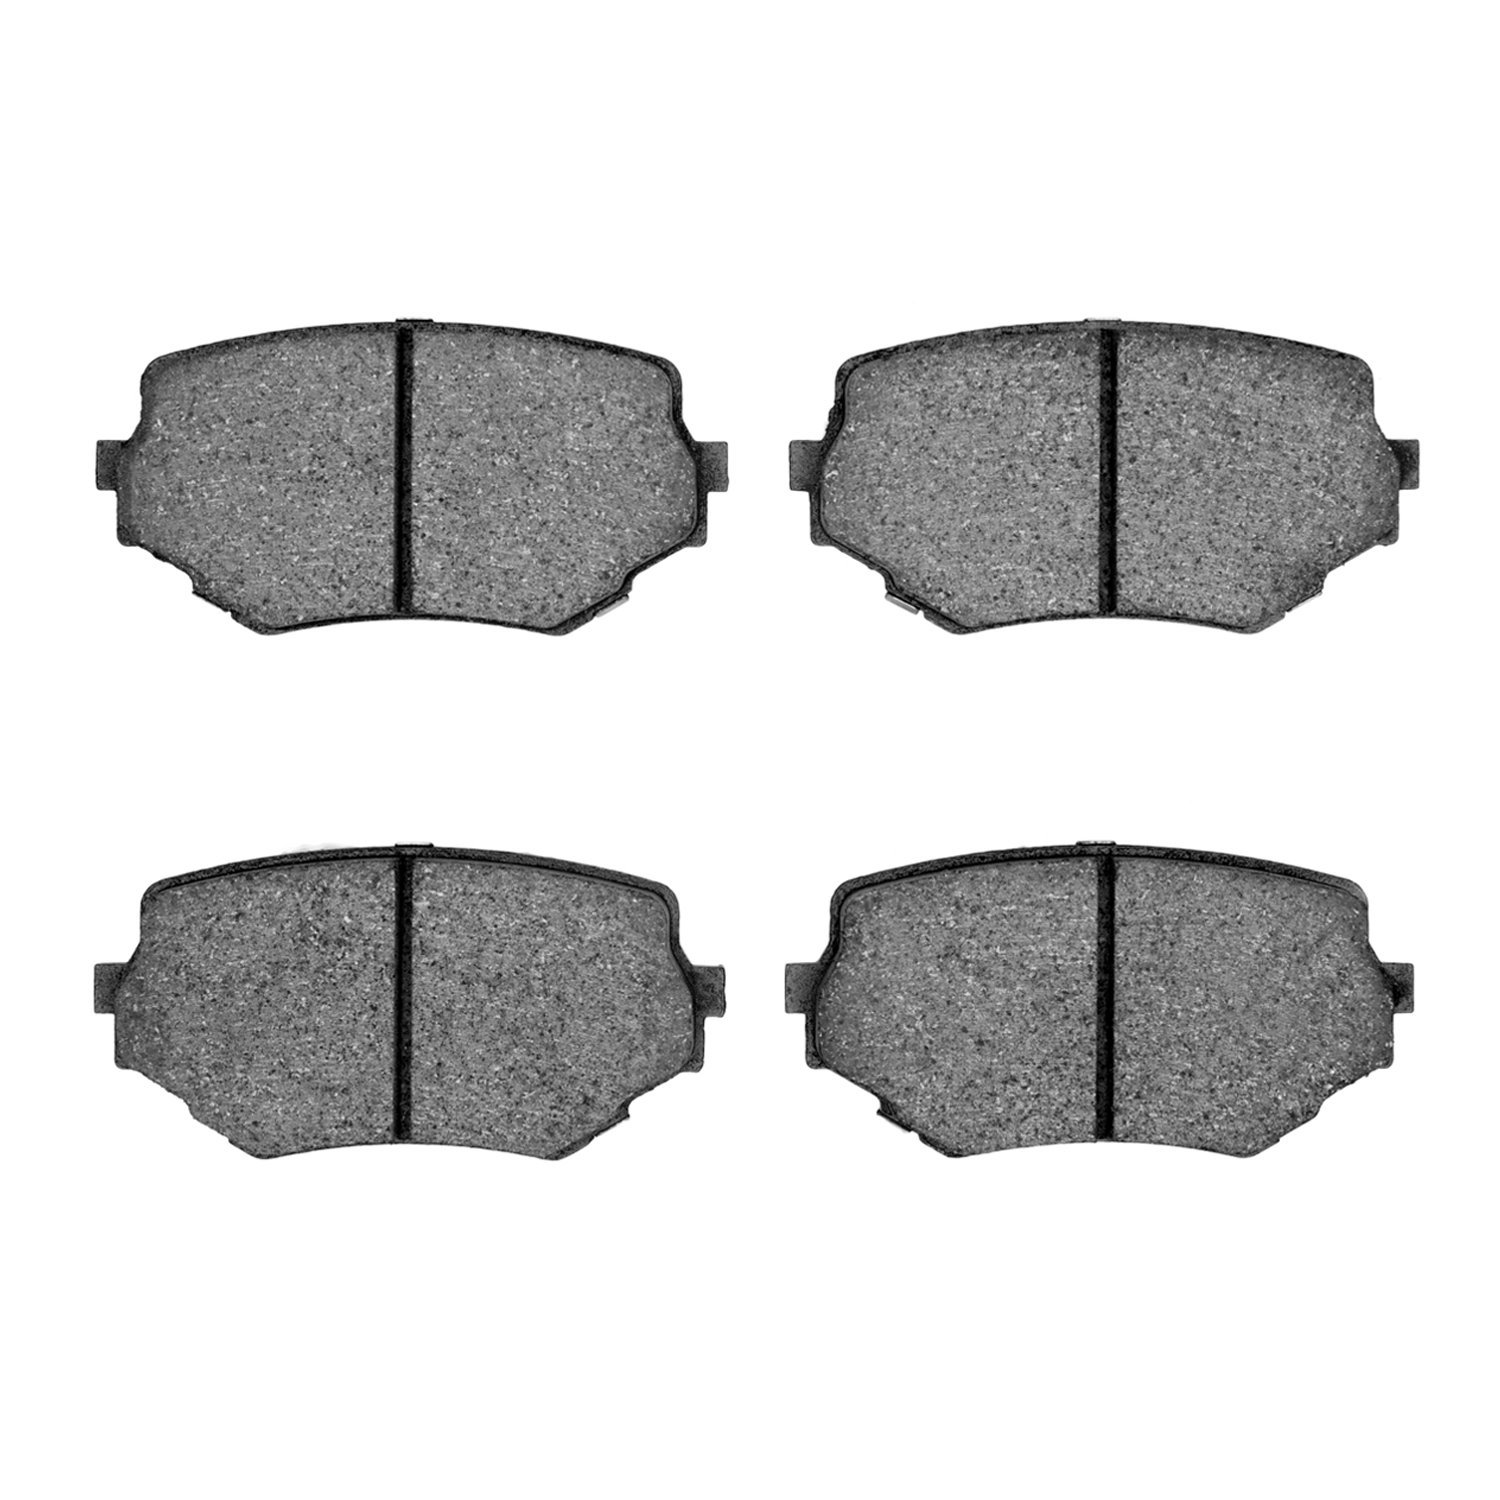 1310-0680-00 3000-Series Ceramic Brake Pads, 1996-2008 Multiple Makes/Models, Position: Front